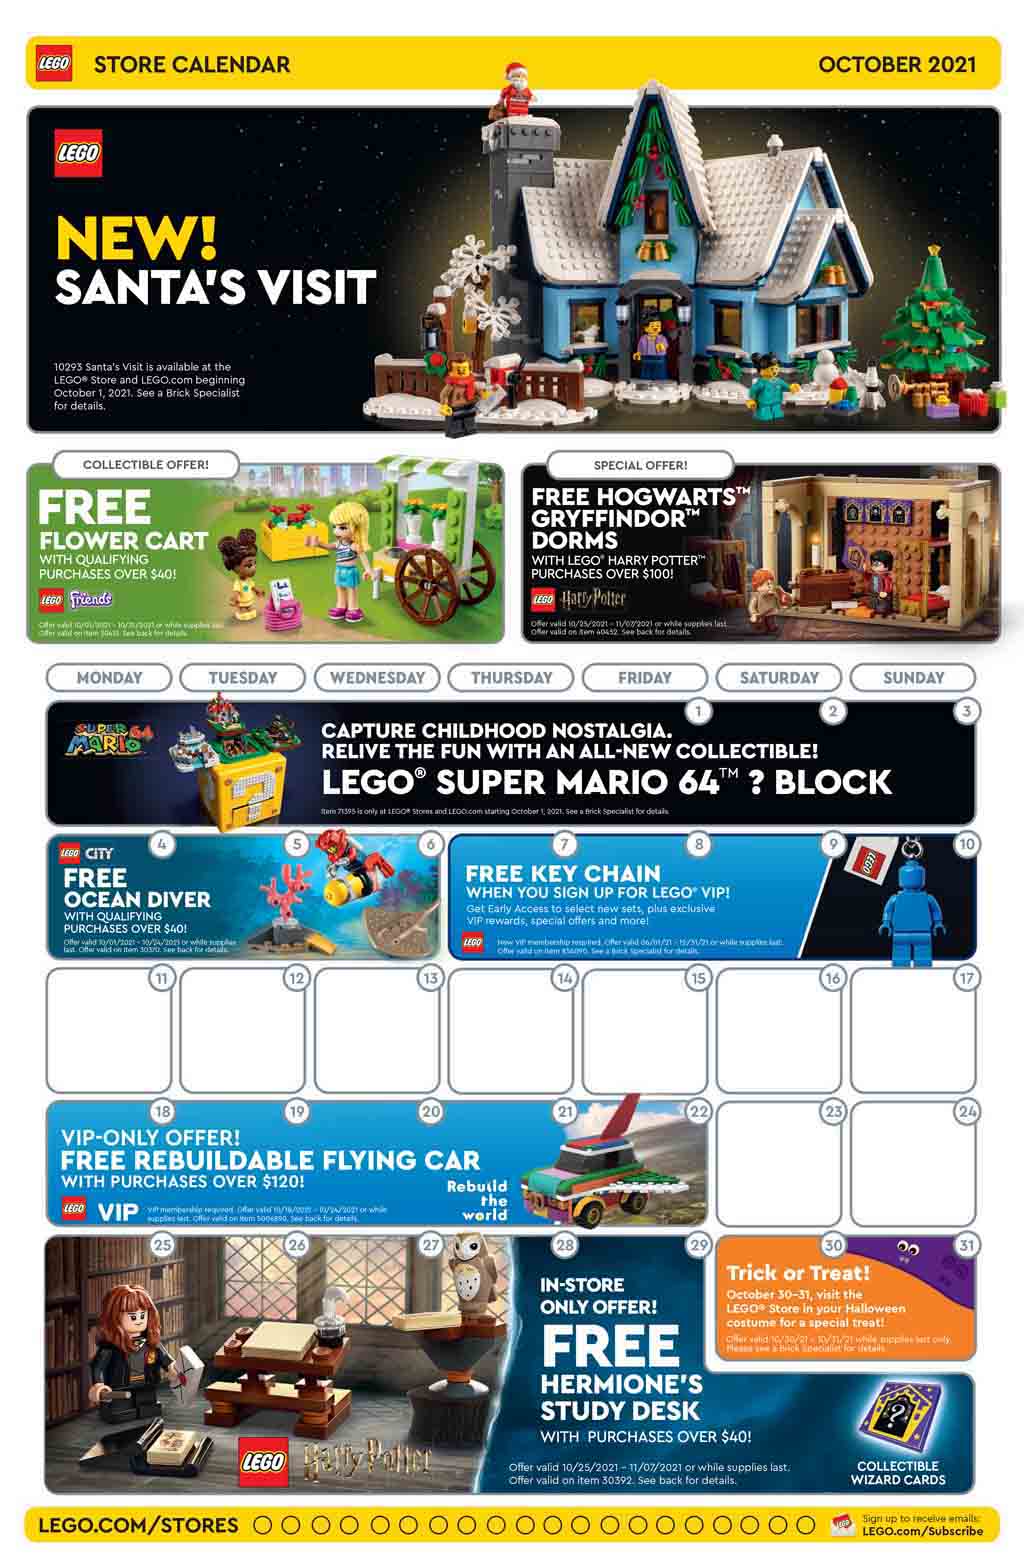 LEGO US Store Kalender Oktober 2021